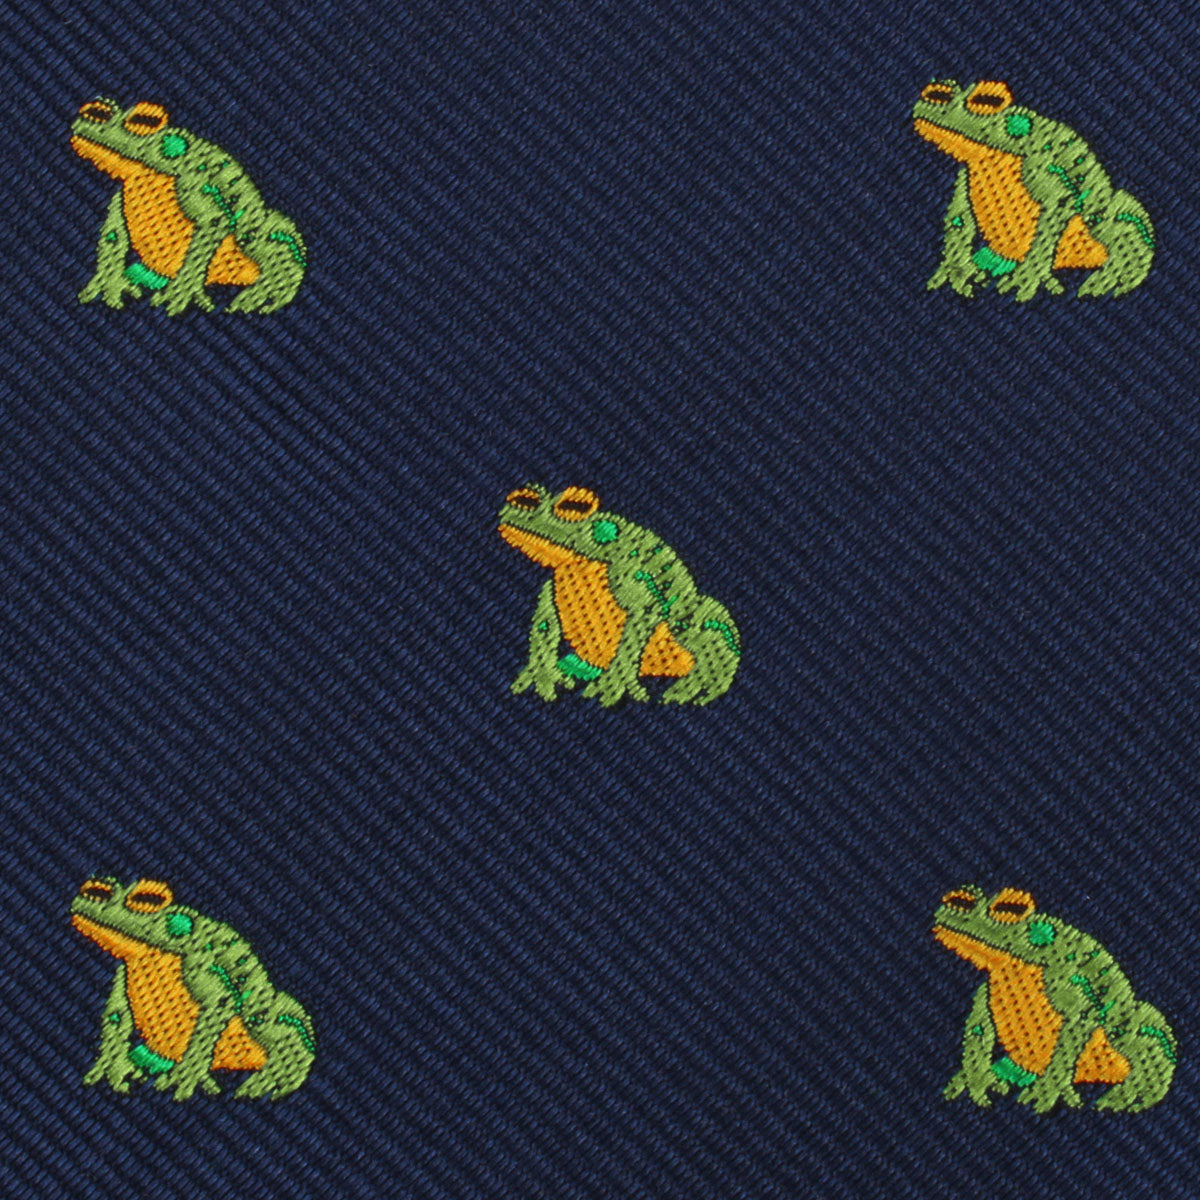 Gero Gero Frog Skinny Tie Fabric